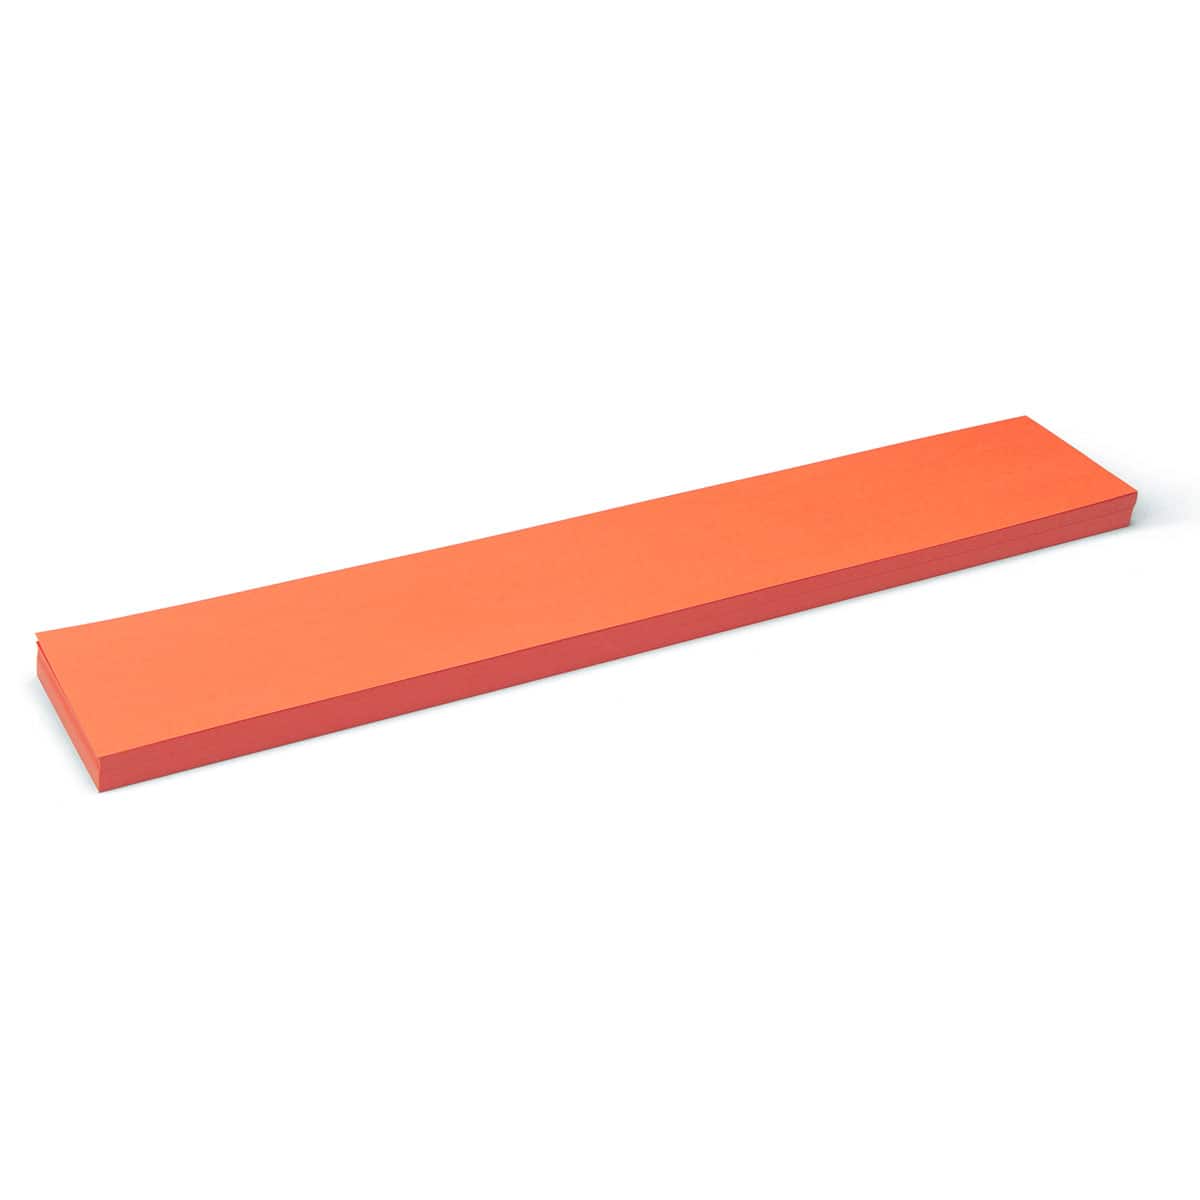 Pin-It Cards, titles, 120 sheets, single colors- 6 orange